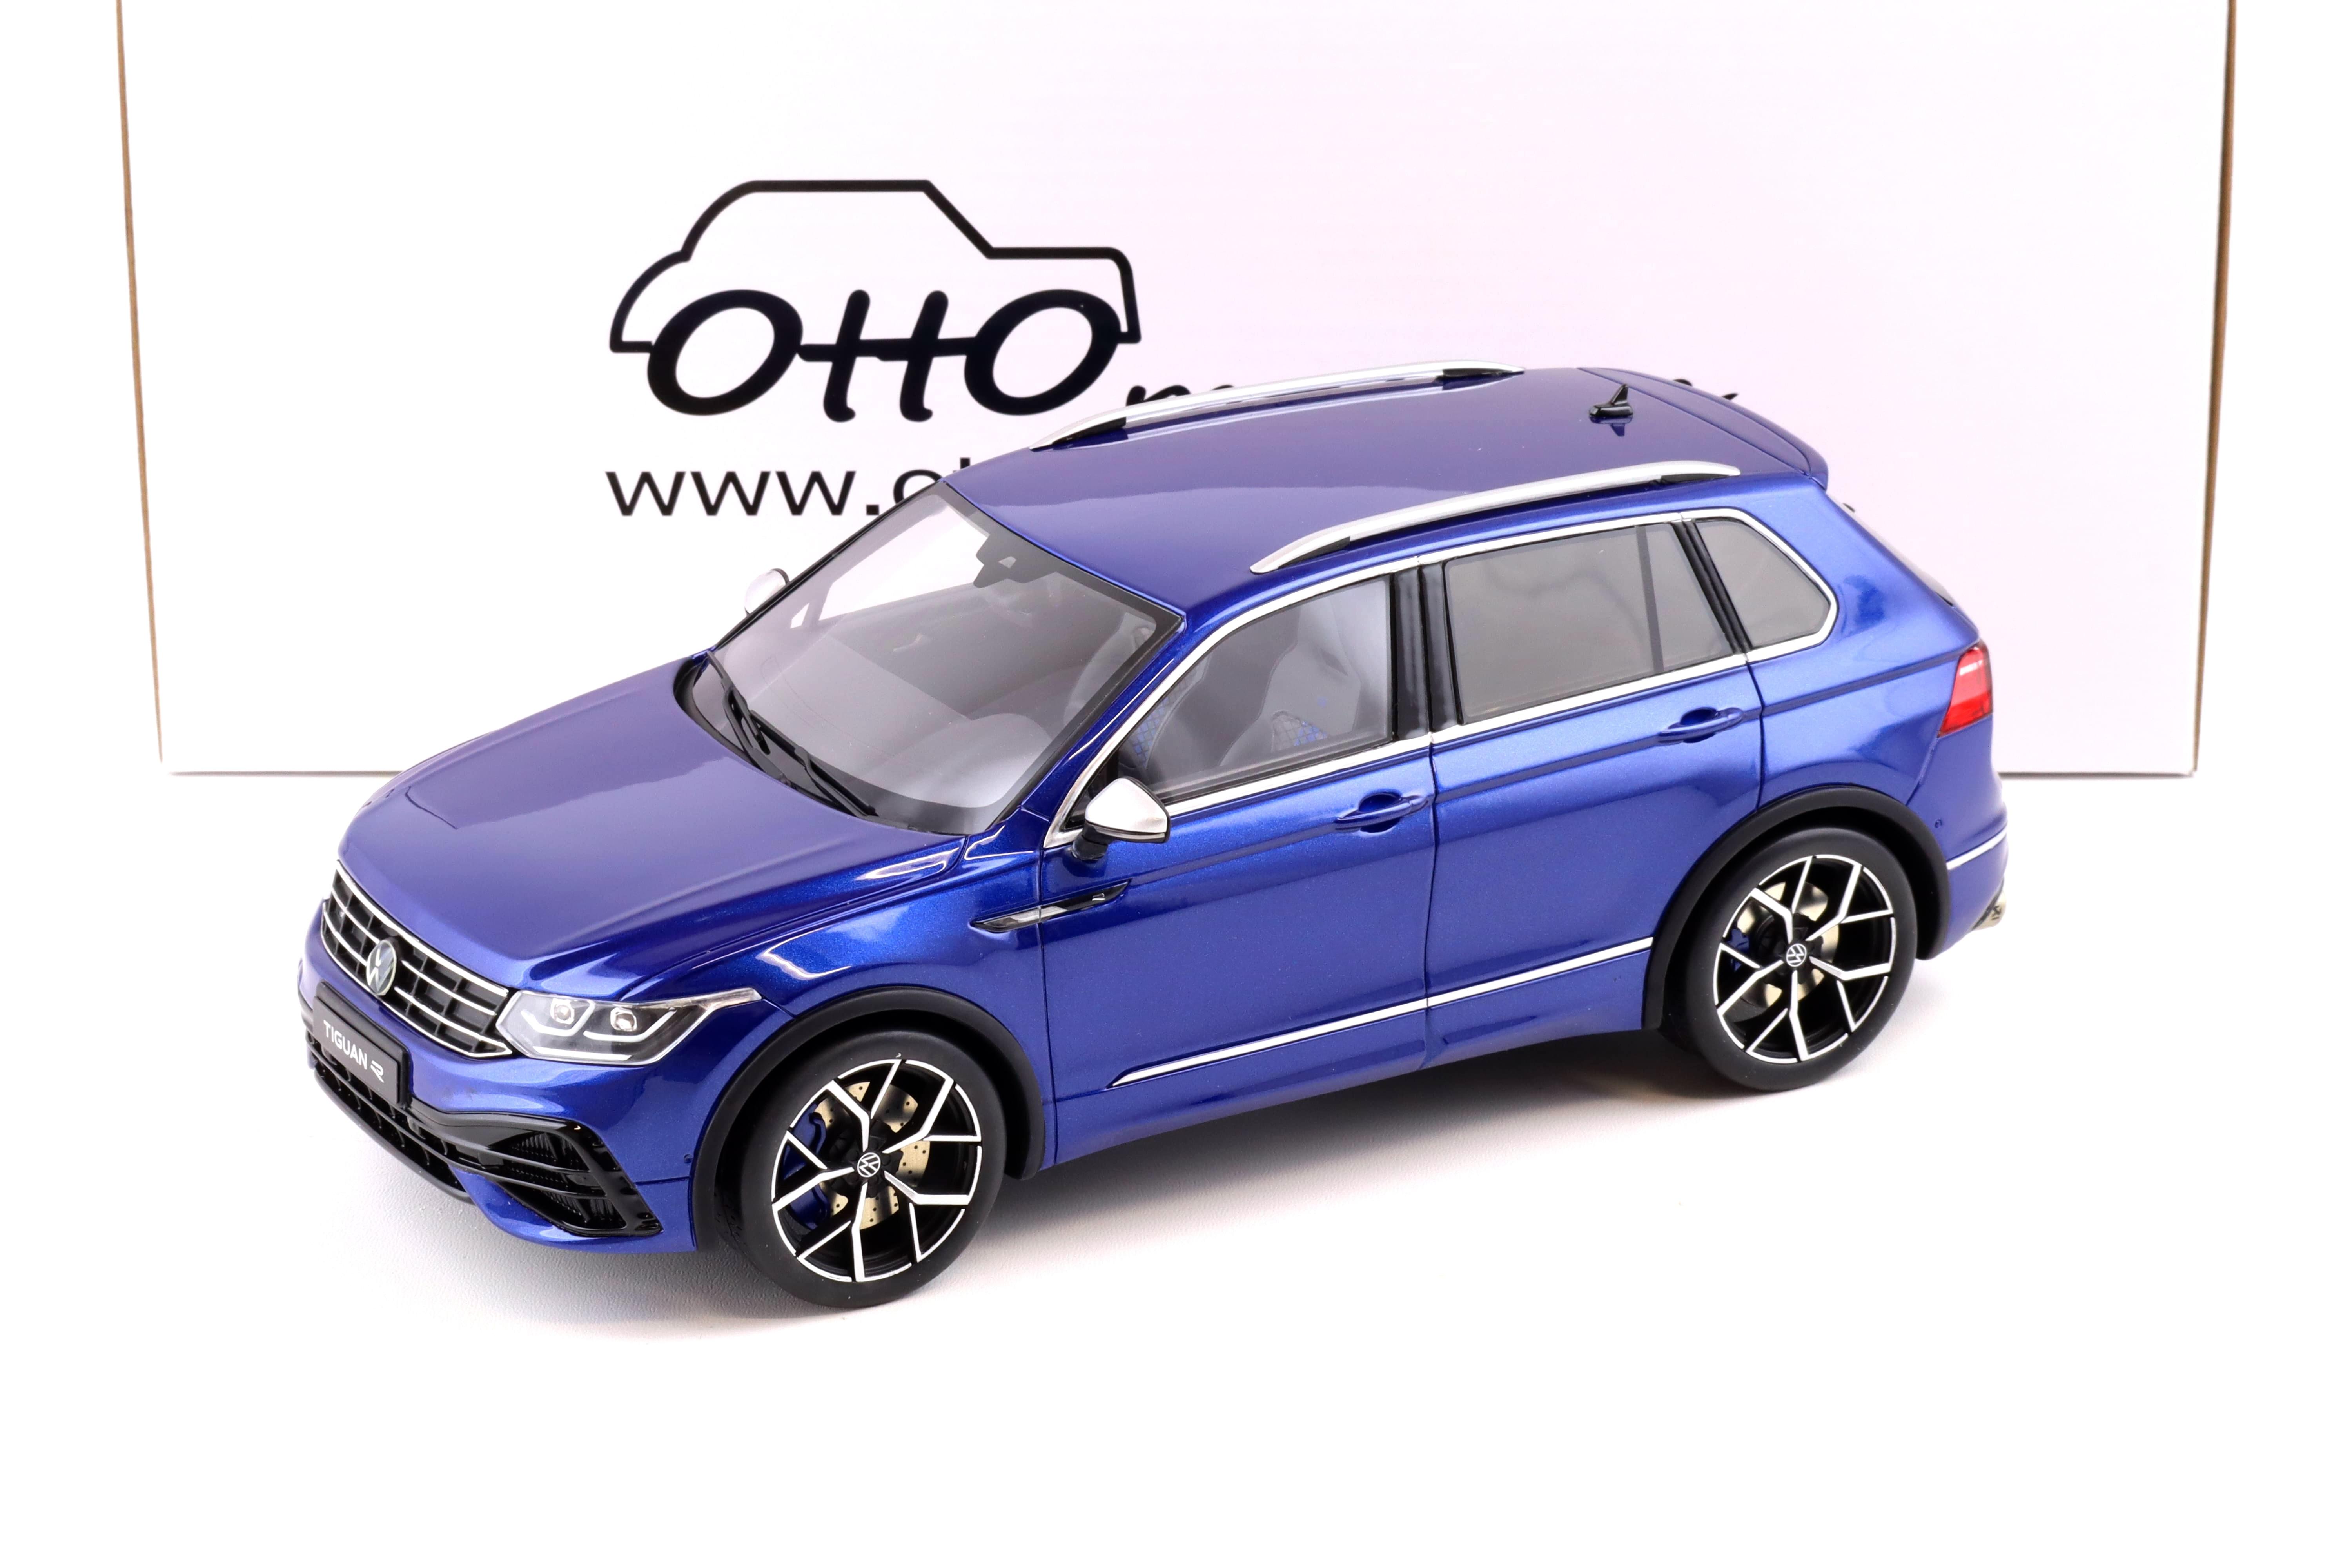 1:18 OTTO mobile OT423 VW Tiguan R blue metallic 2021